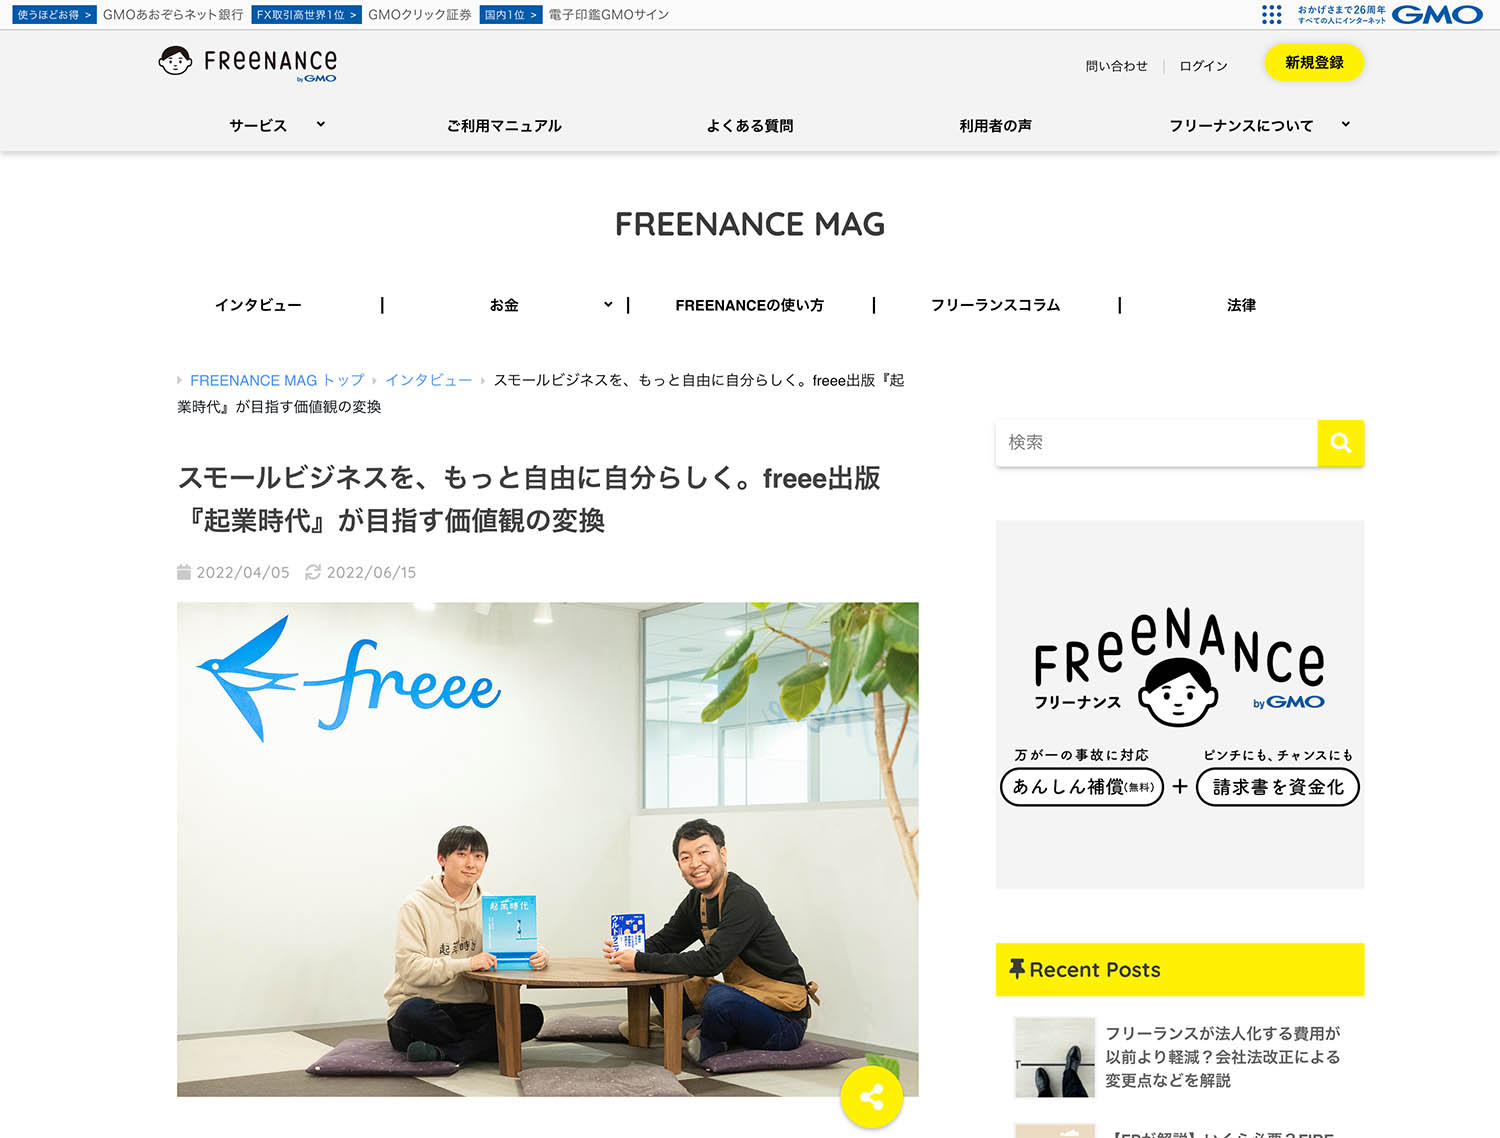 freenance site freee